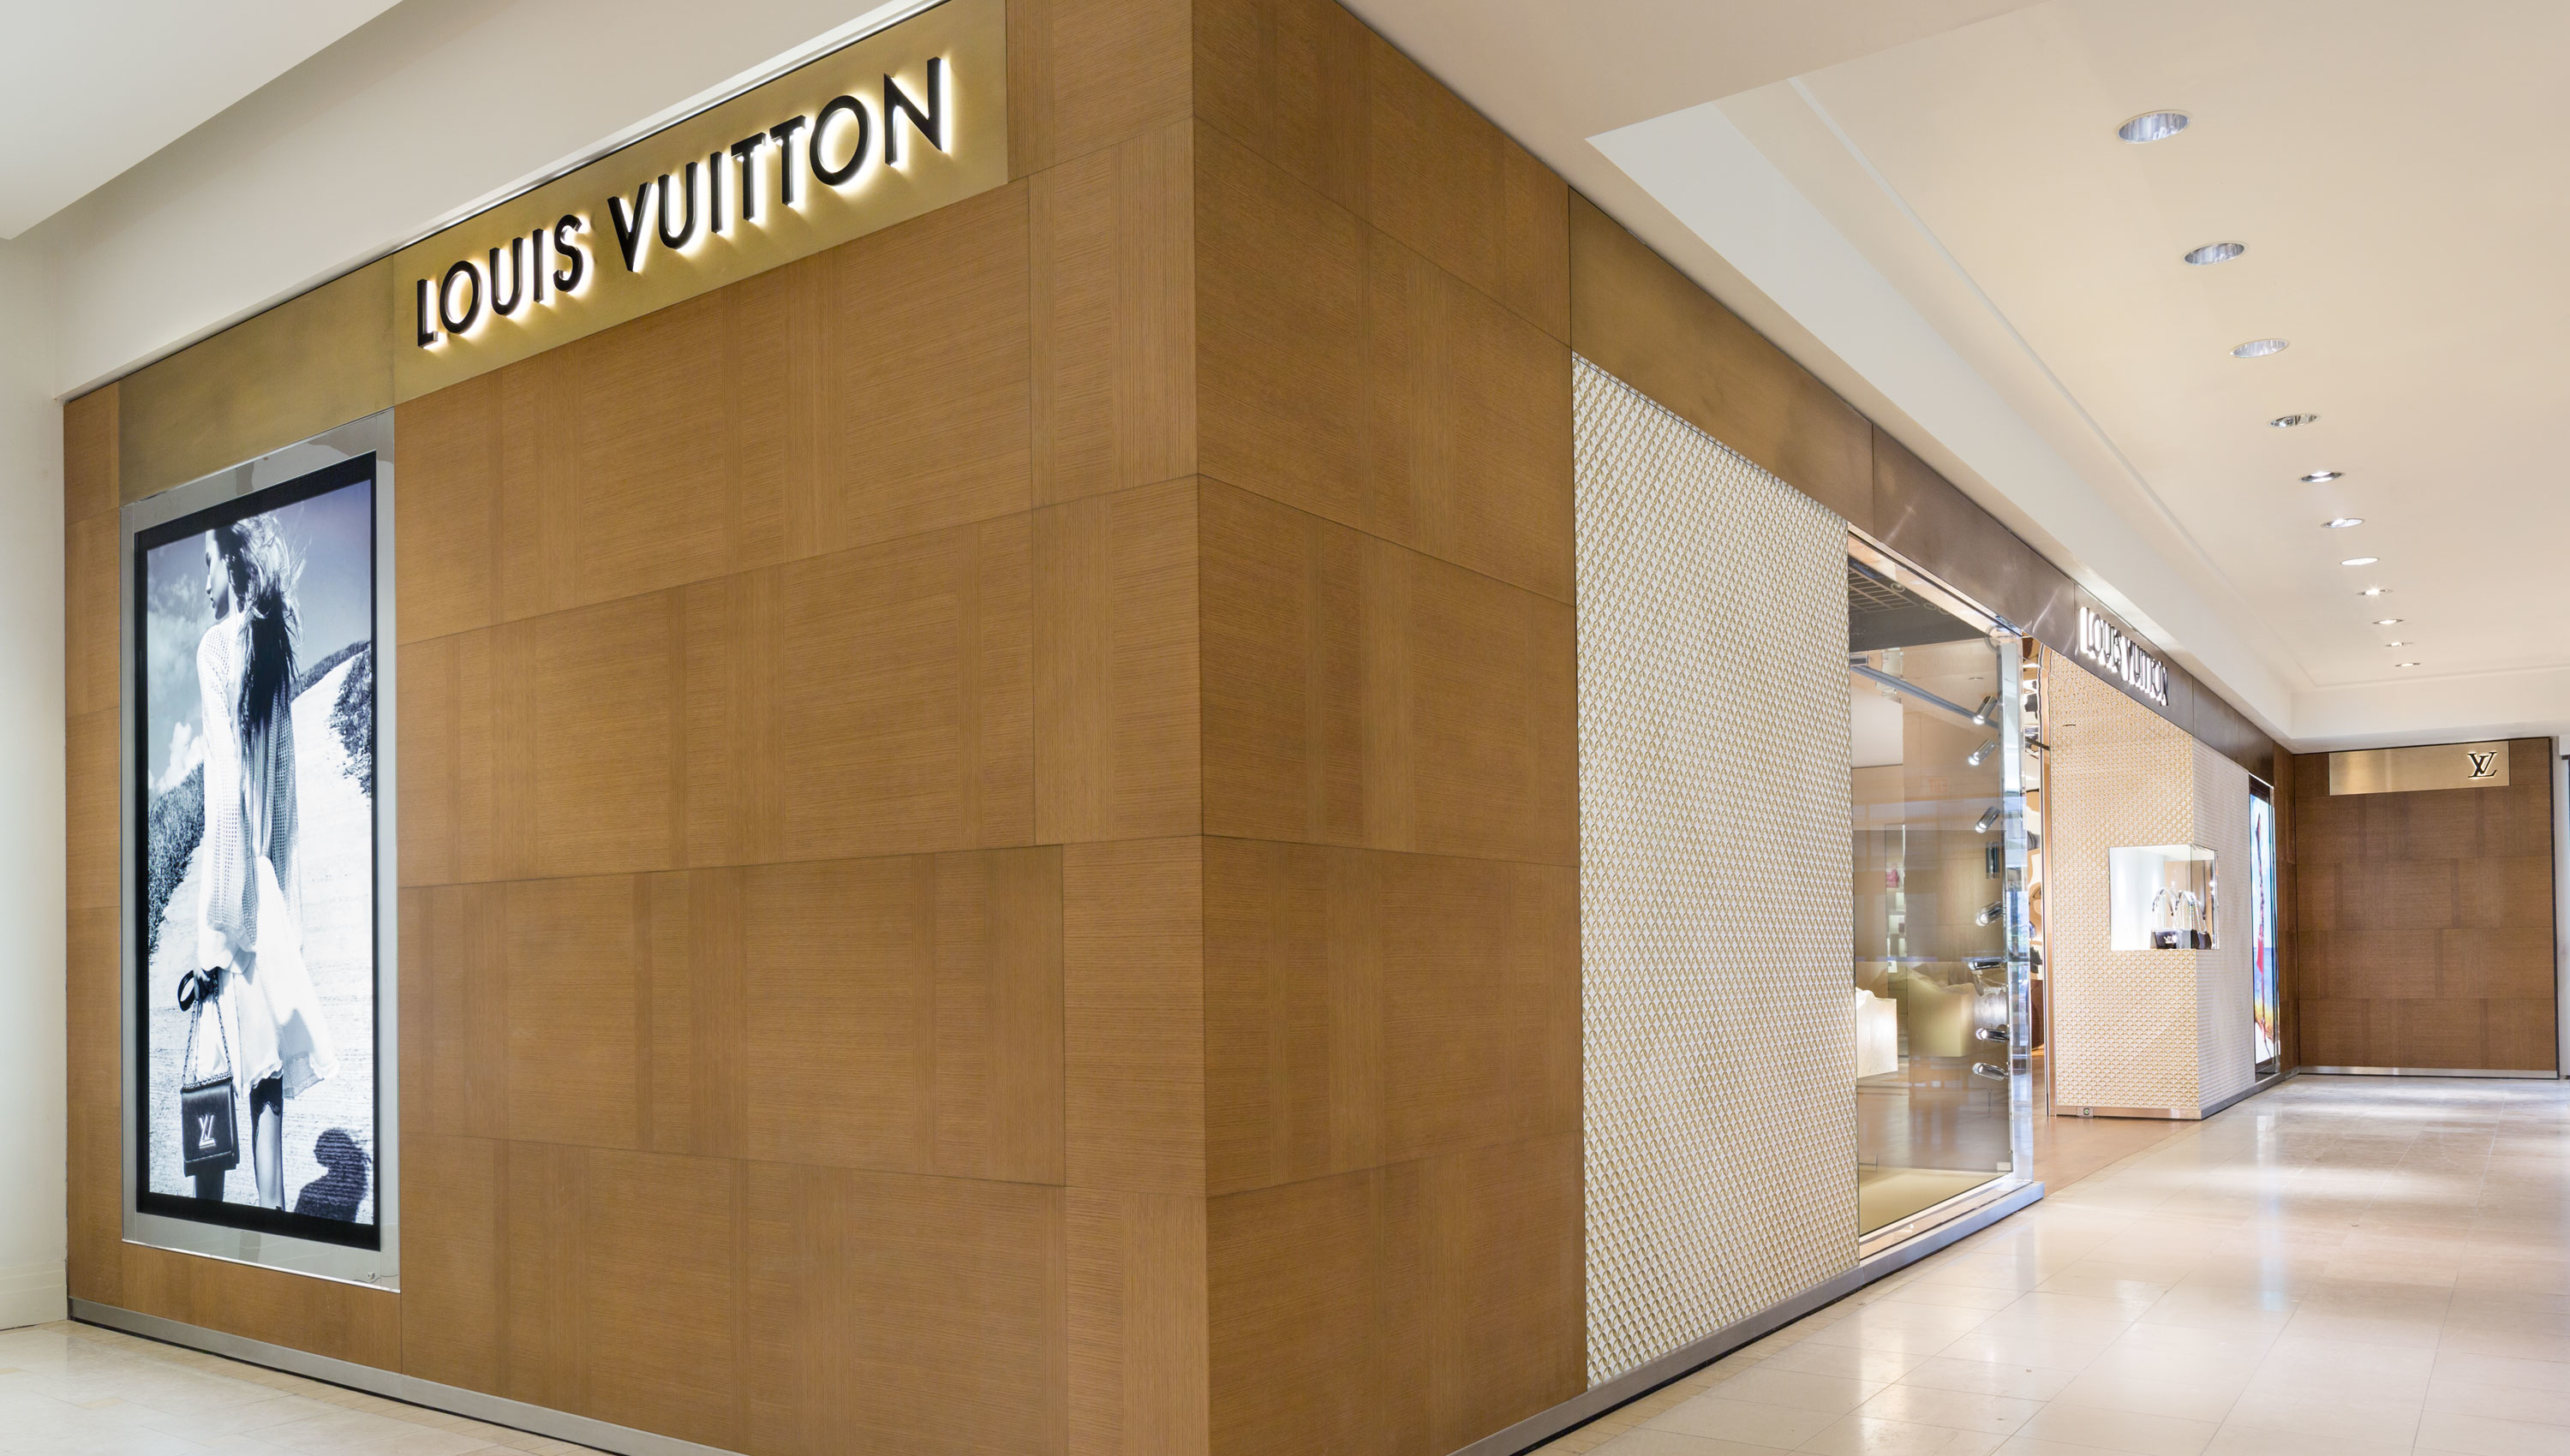 Louis Vuitton Cleveland Saks in Beachwood, OH - (216) 595-1...